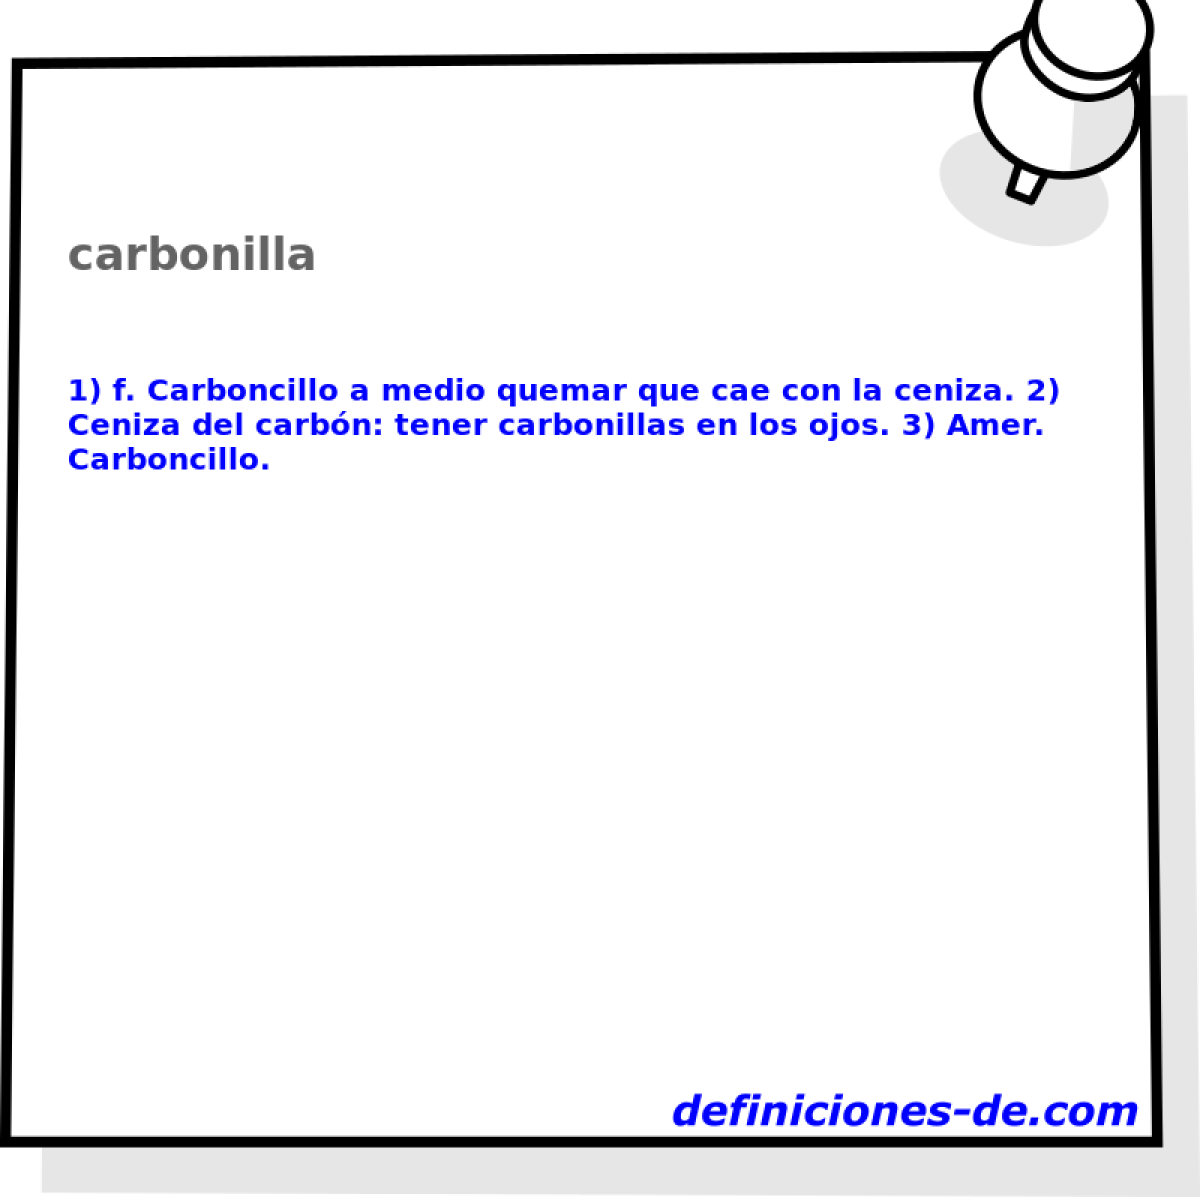 carbonilla 